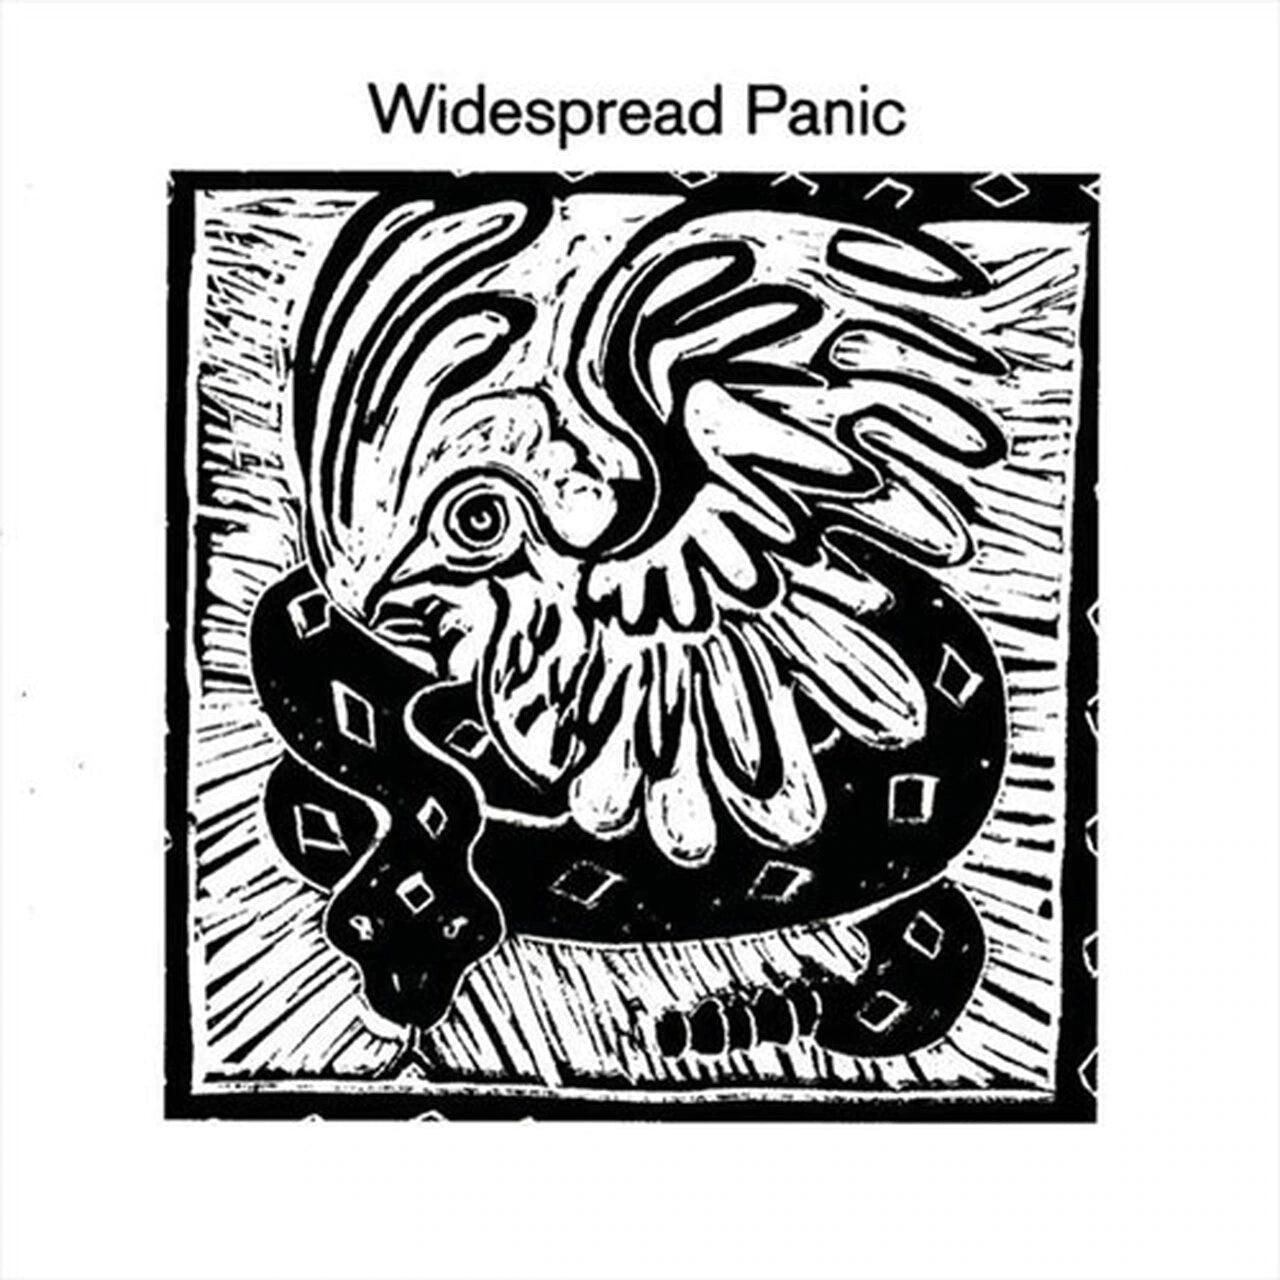 WIDESPREAD PANIC  'WIDESPREAD PANIC' 2LP (White & Black Vinyl)